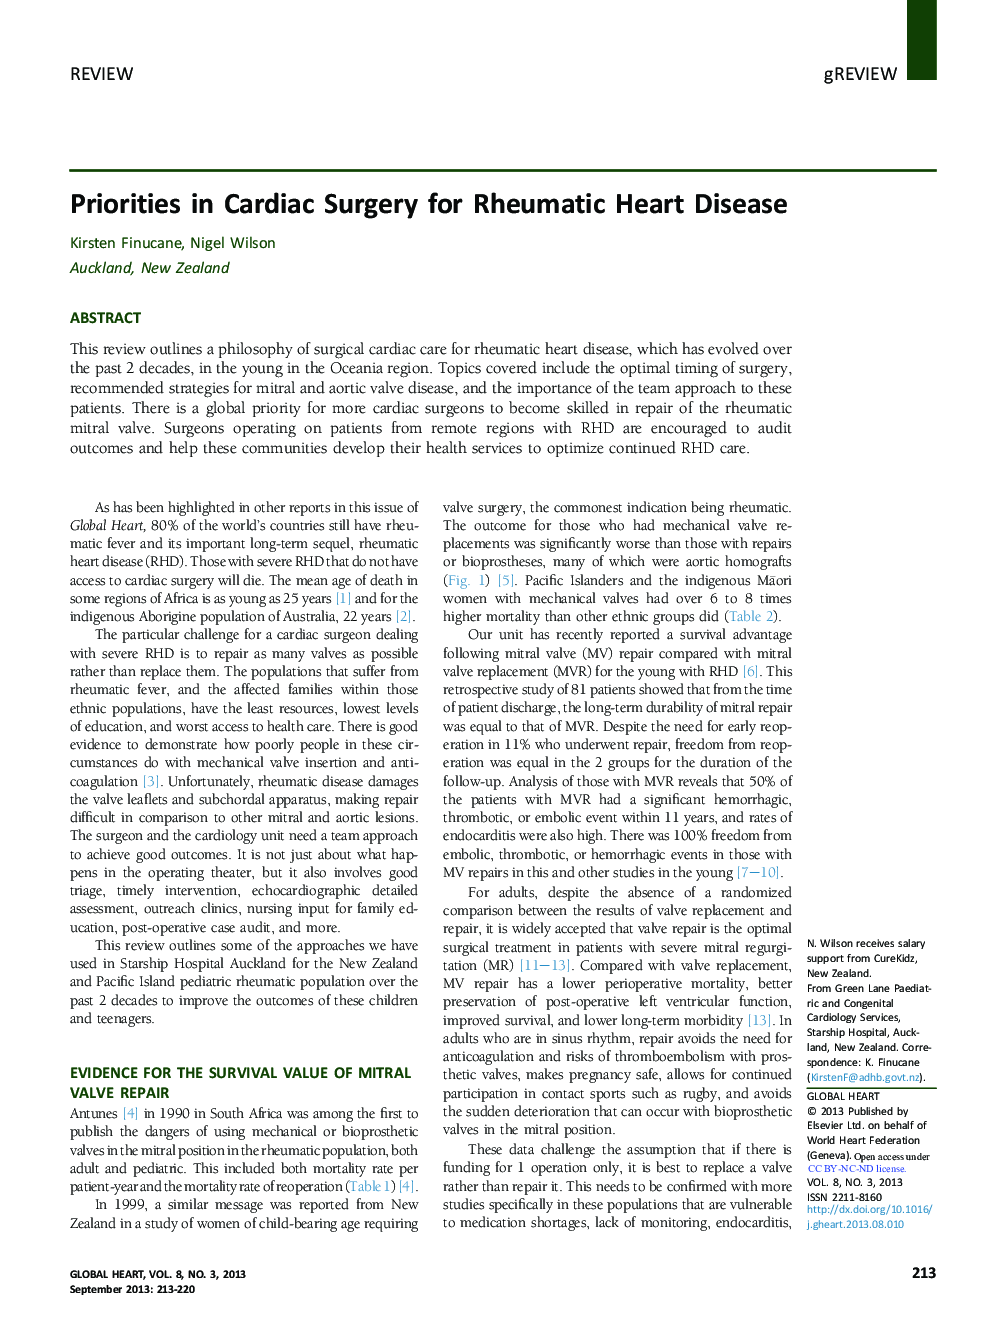 Priorities in Cardiac Surgery for Rheumatic Heart Disease